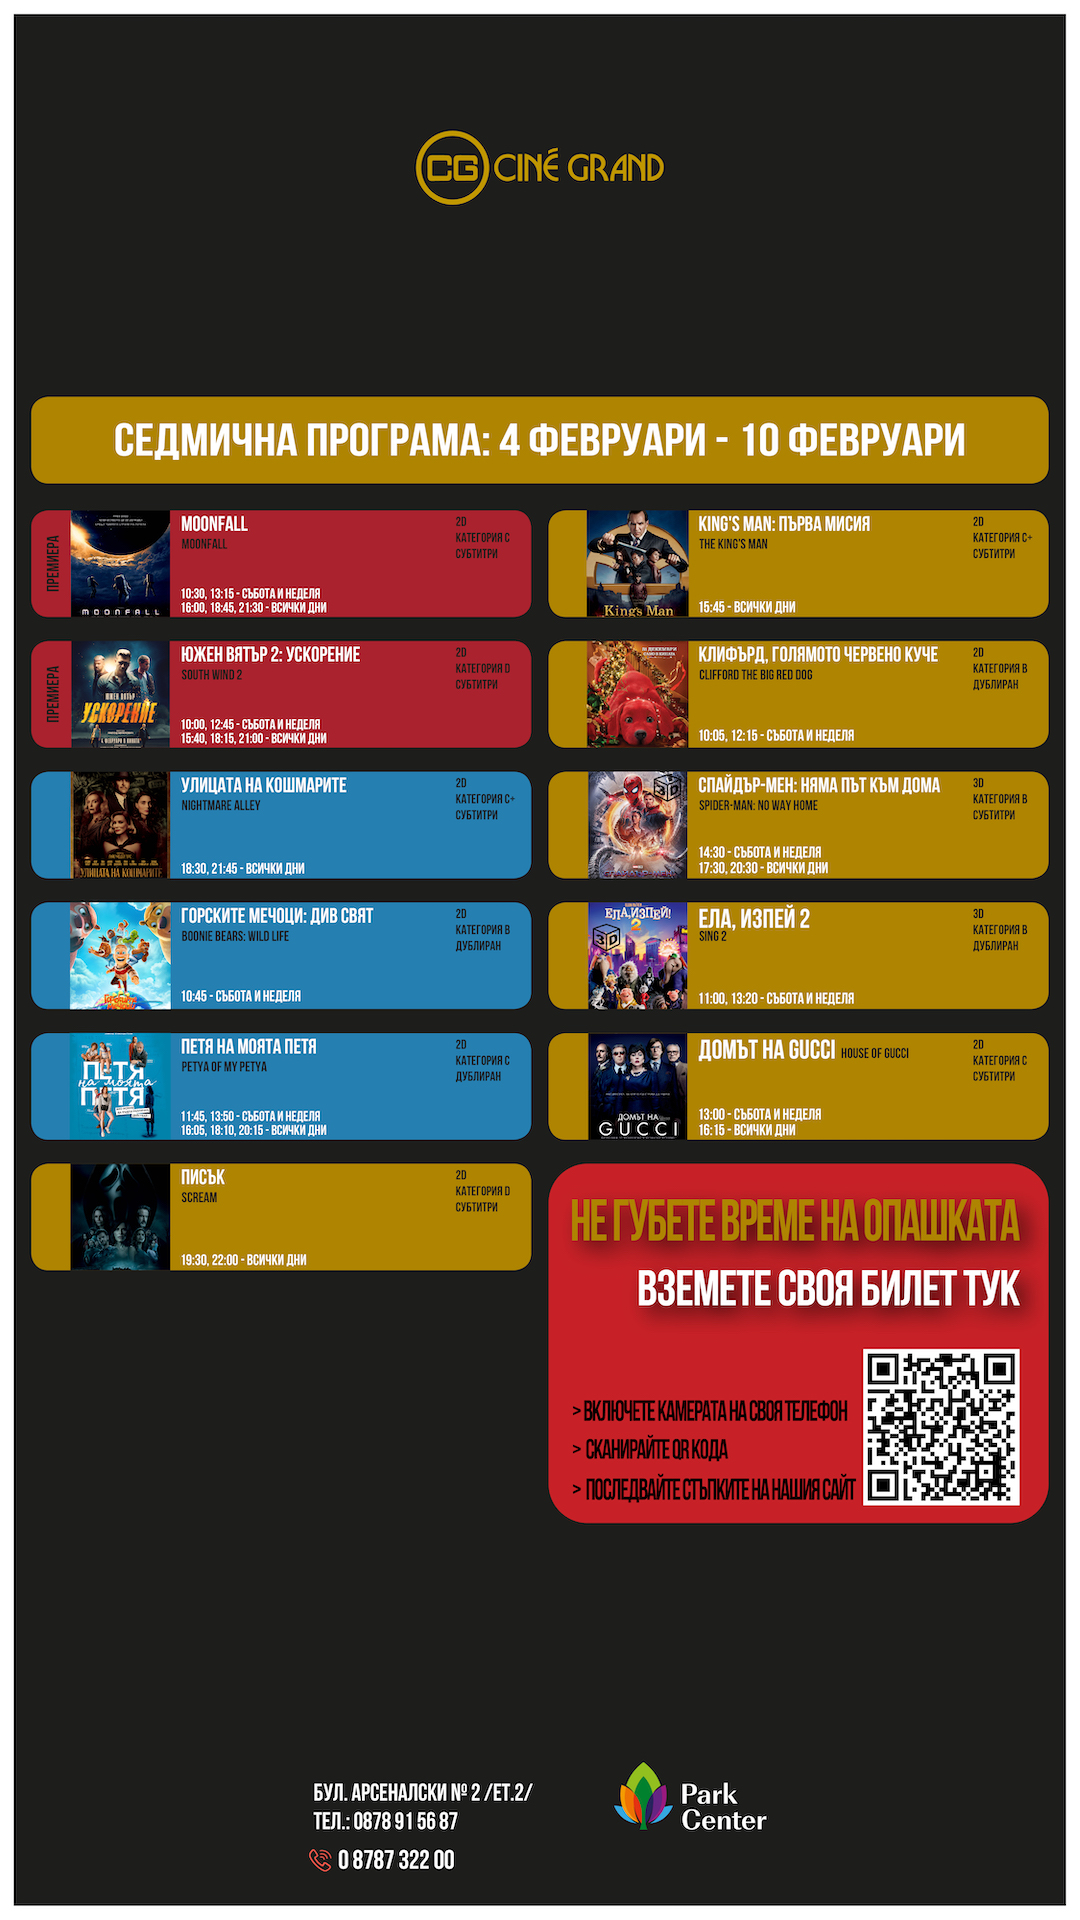 Cine Grand Парк Център София: Кино програма - 04 -10 февруари 2022